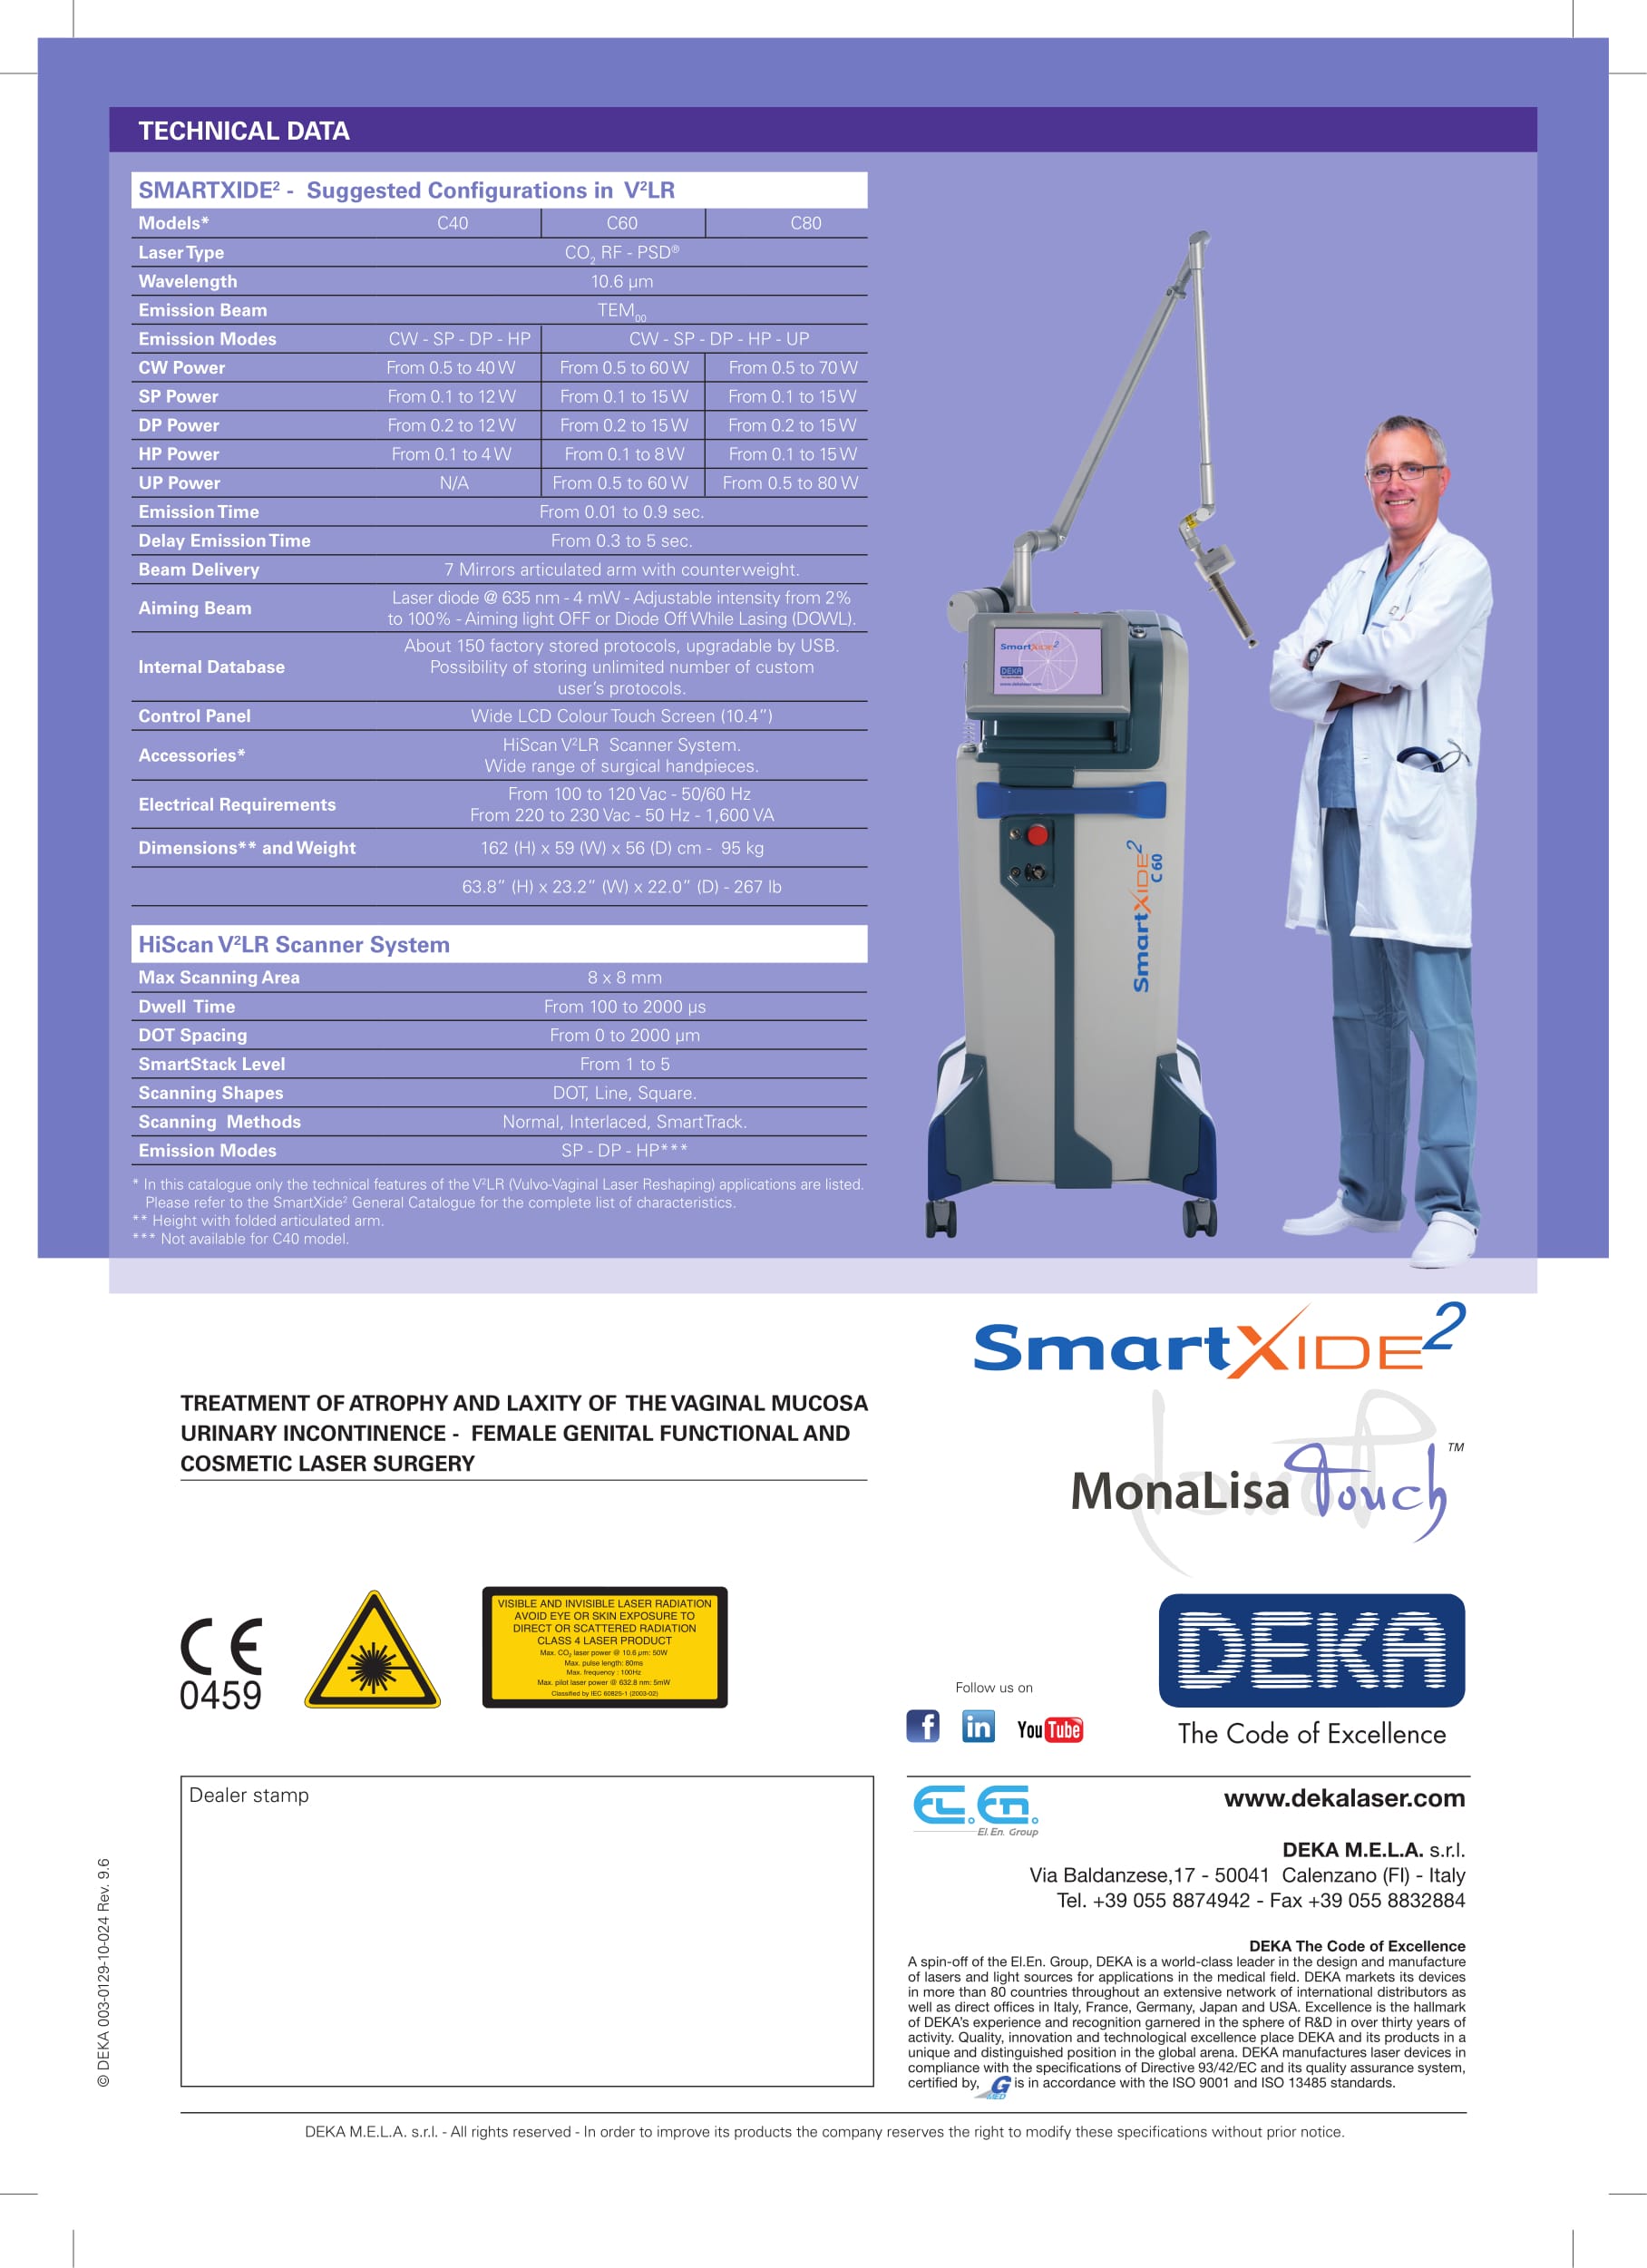 Smartxide2 V2LR Brochure ARA Rev 9.6-8